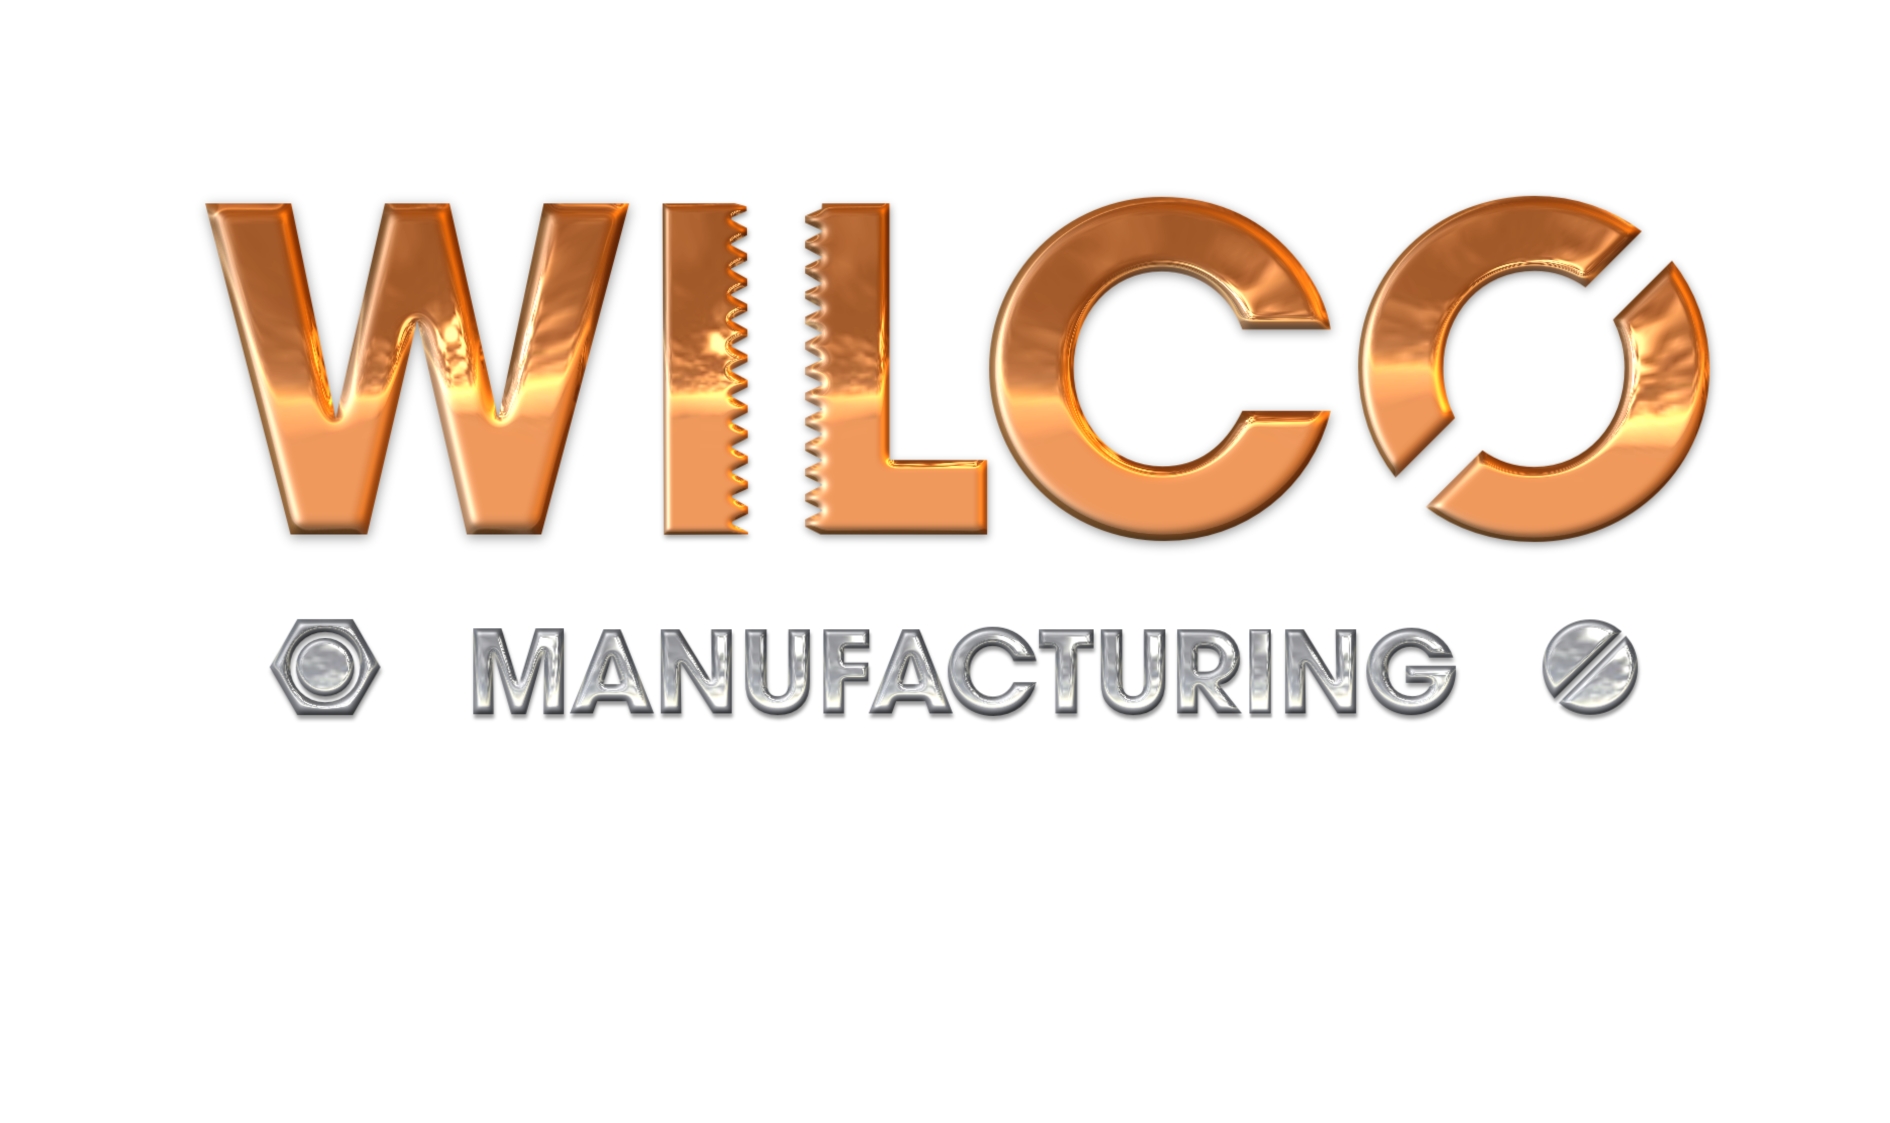 Wilco Manufacturing Ltd